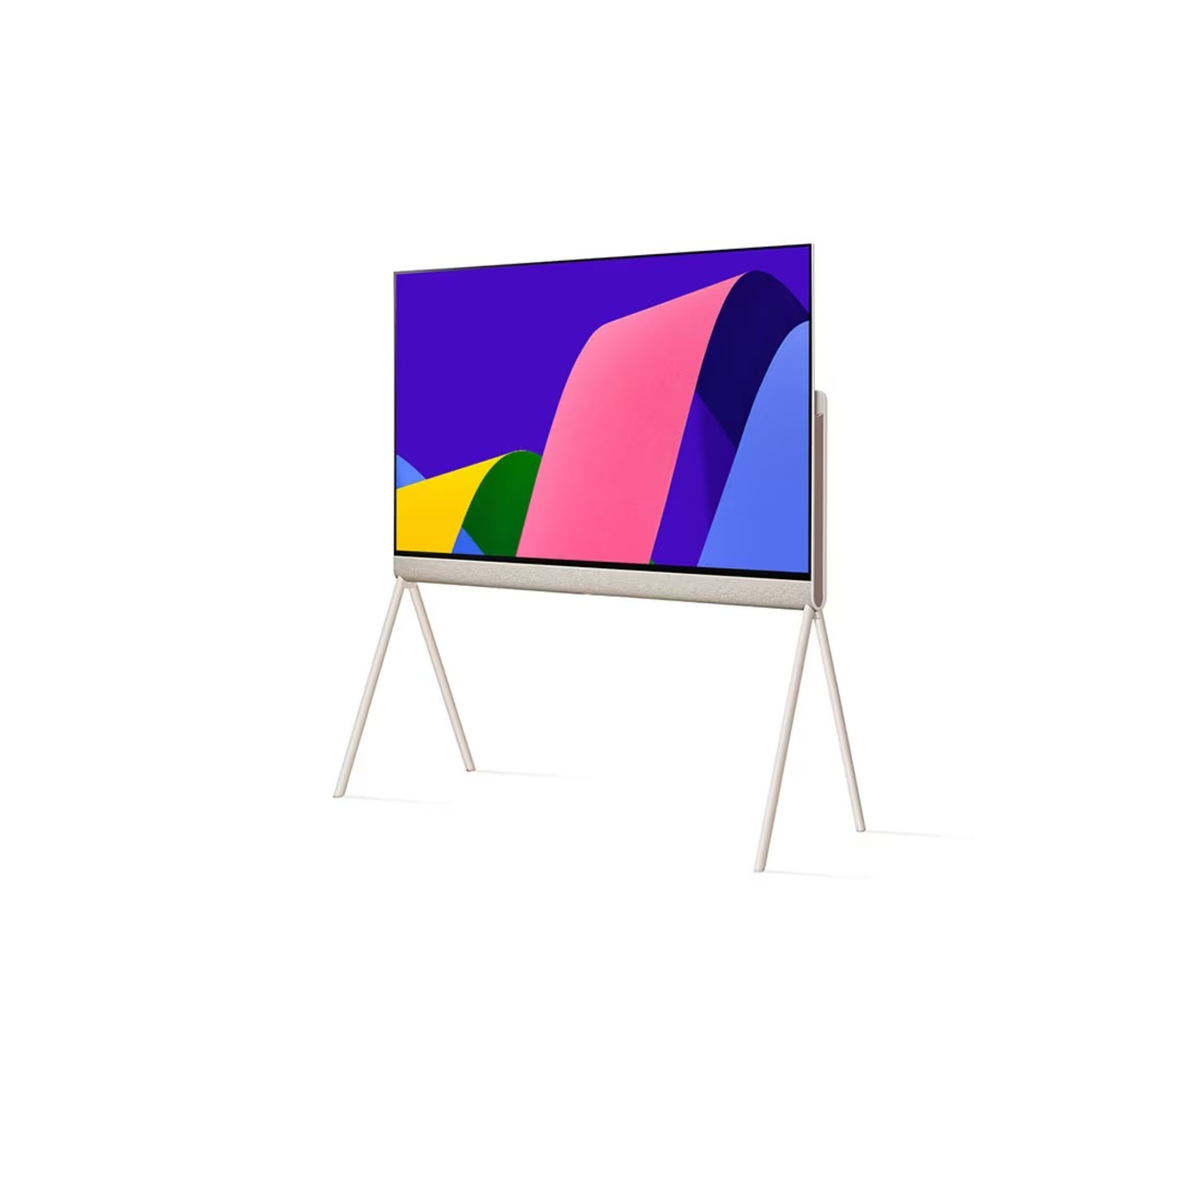 LG OLED Pose 48 Inch 4K TV Smart TV, All Around-Design, a9 Gen5 AI processor - 48LX1Q6LA